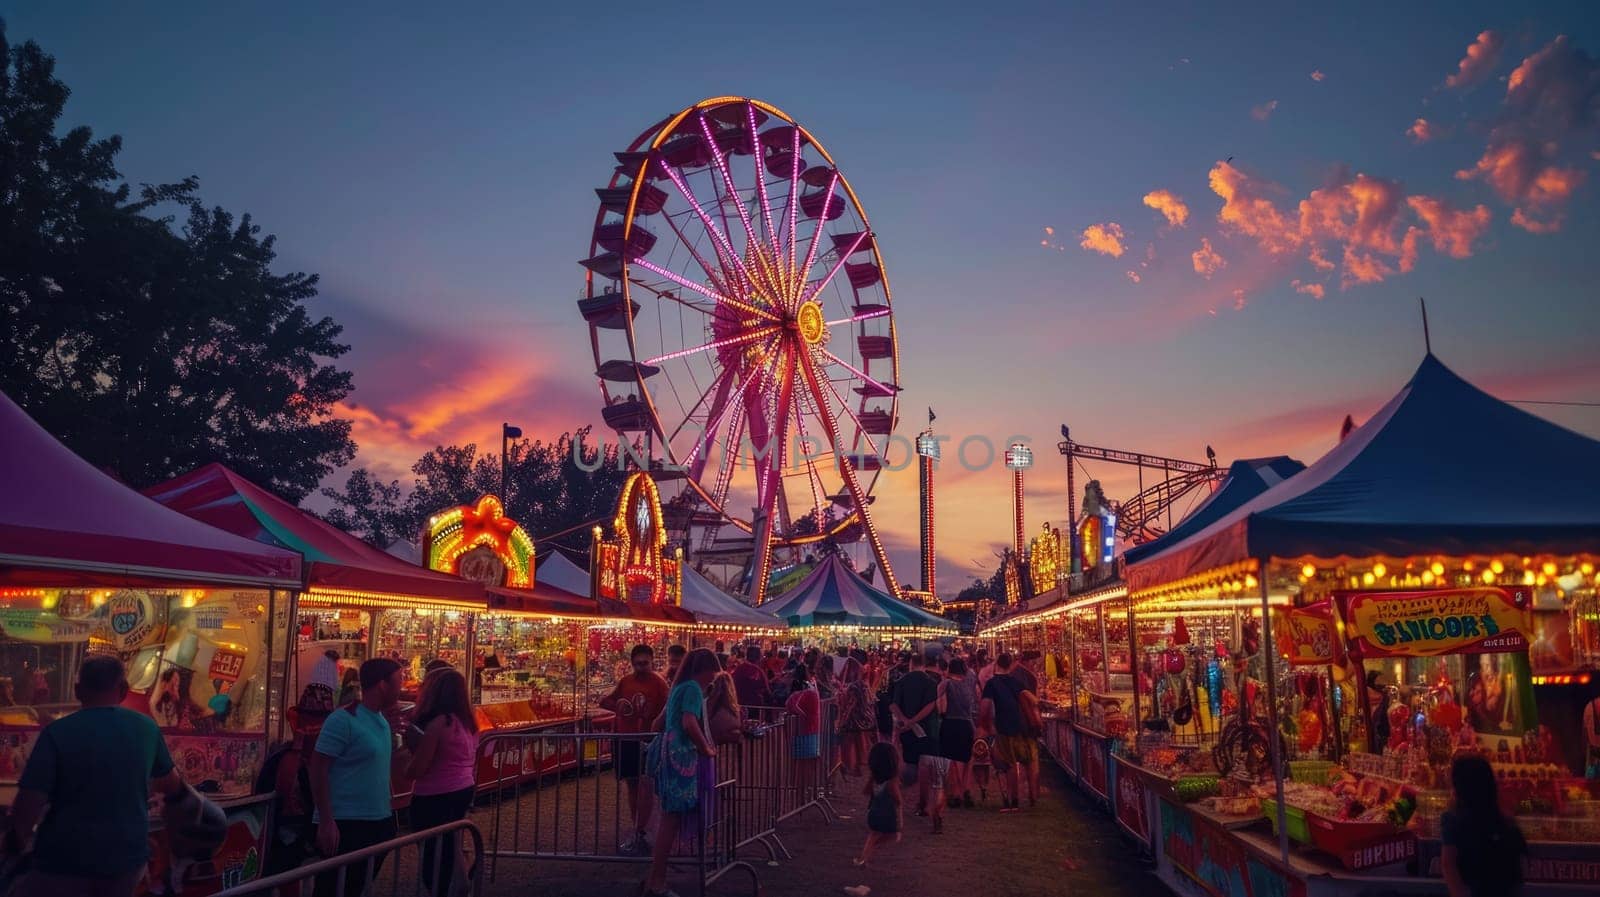 A lively carnival at dusk, Ferris wheel lights. Resplendent. by biancoblue